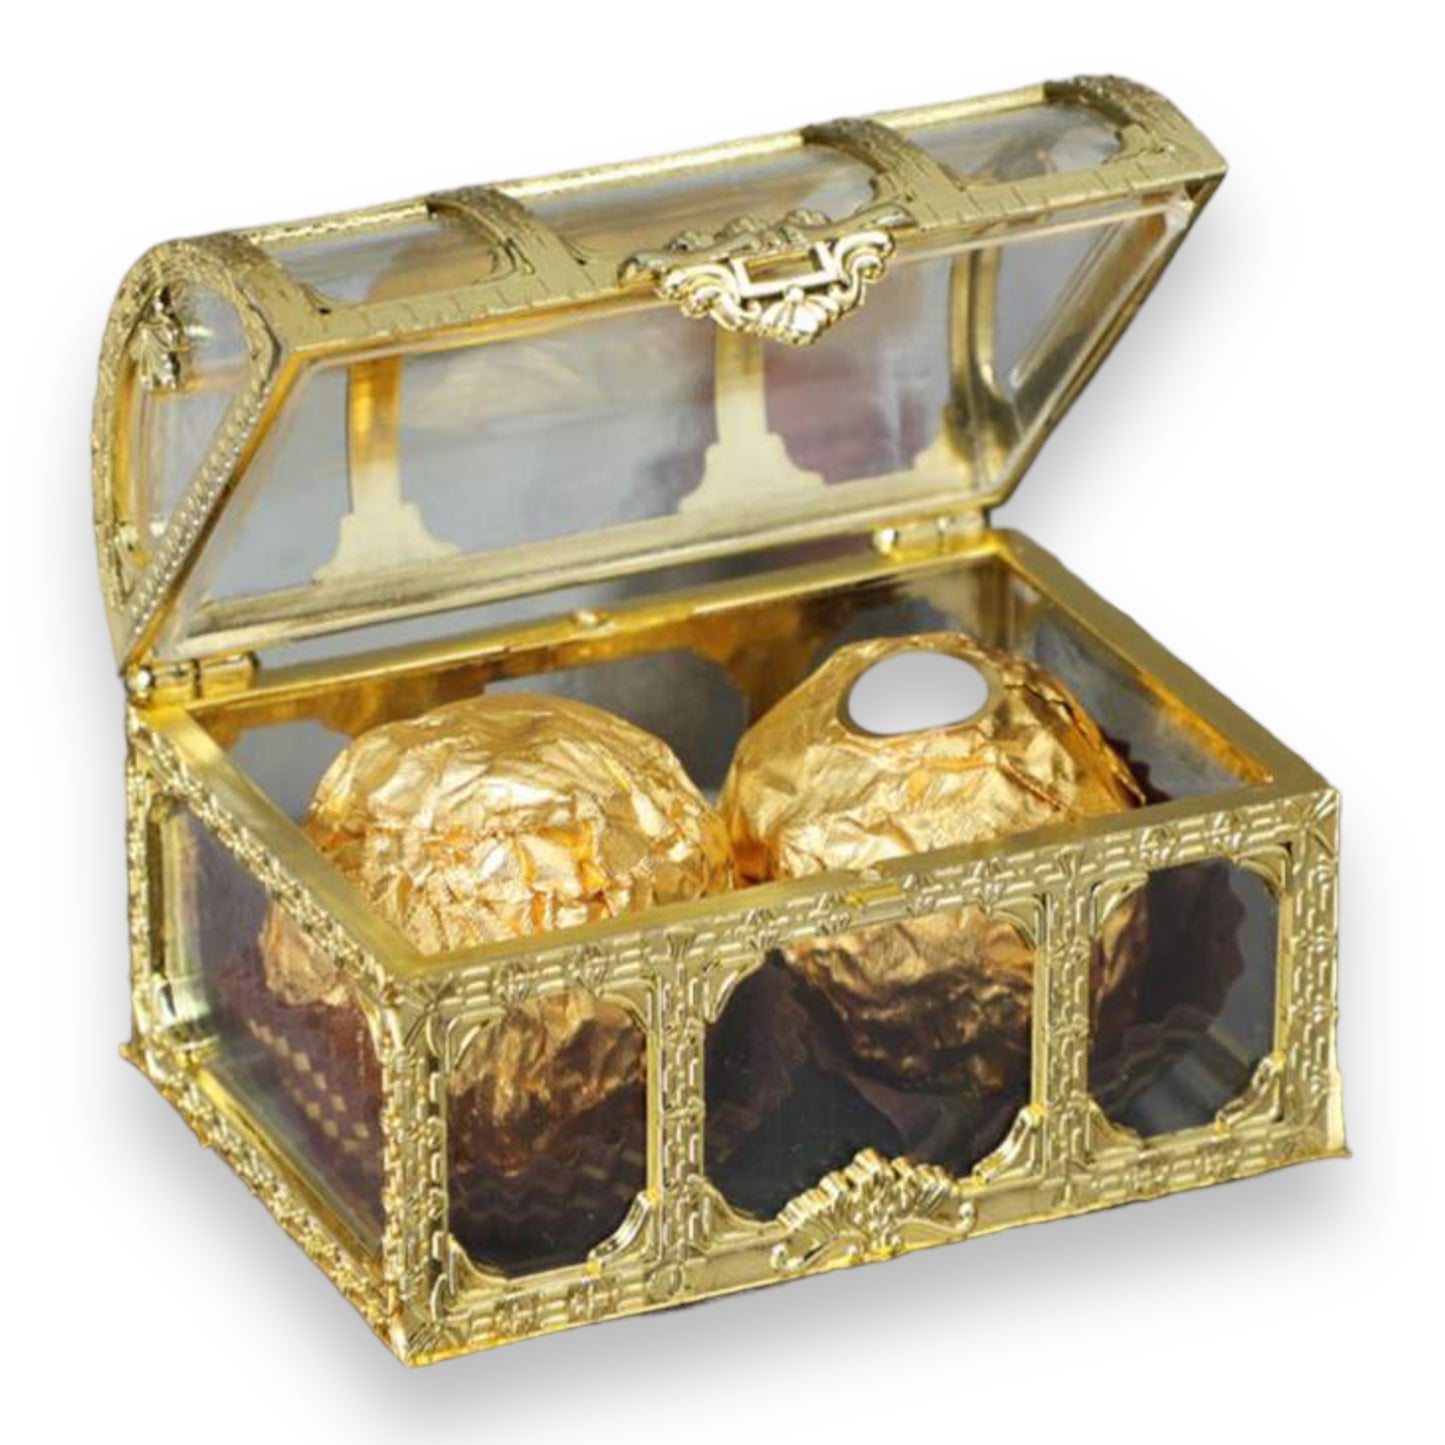 Timmy Toys - S007 - Treasure Box - Gold - 90mm x 63mm